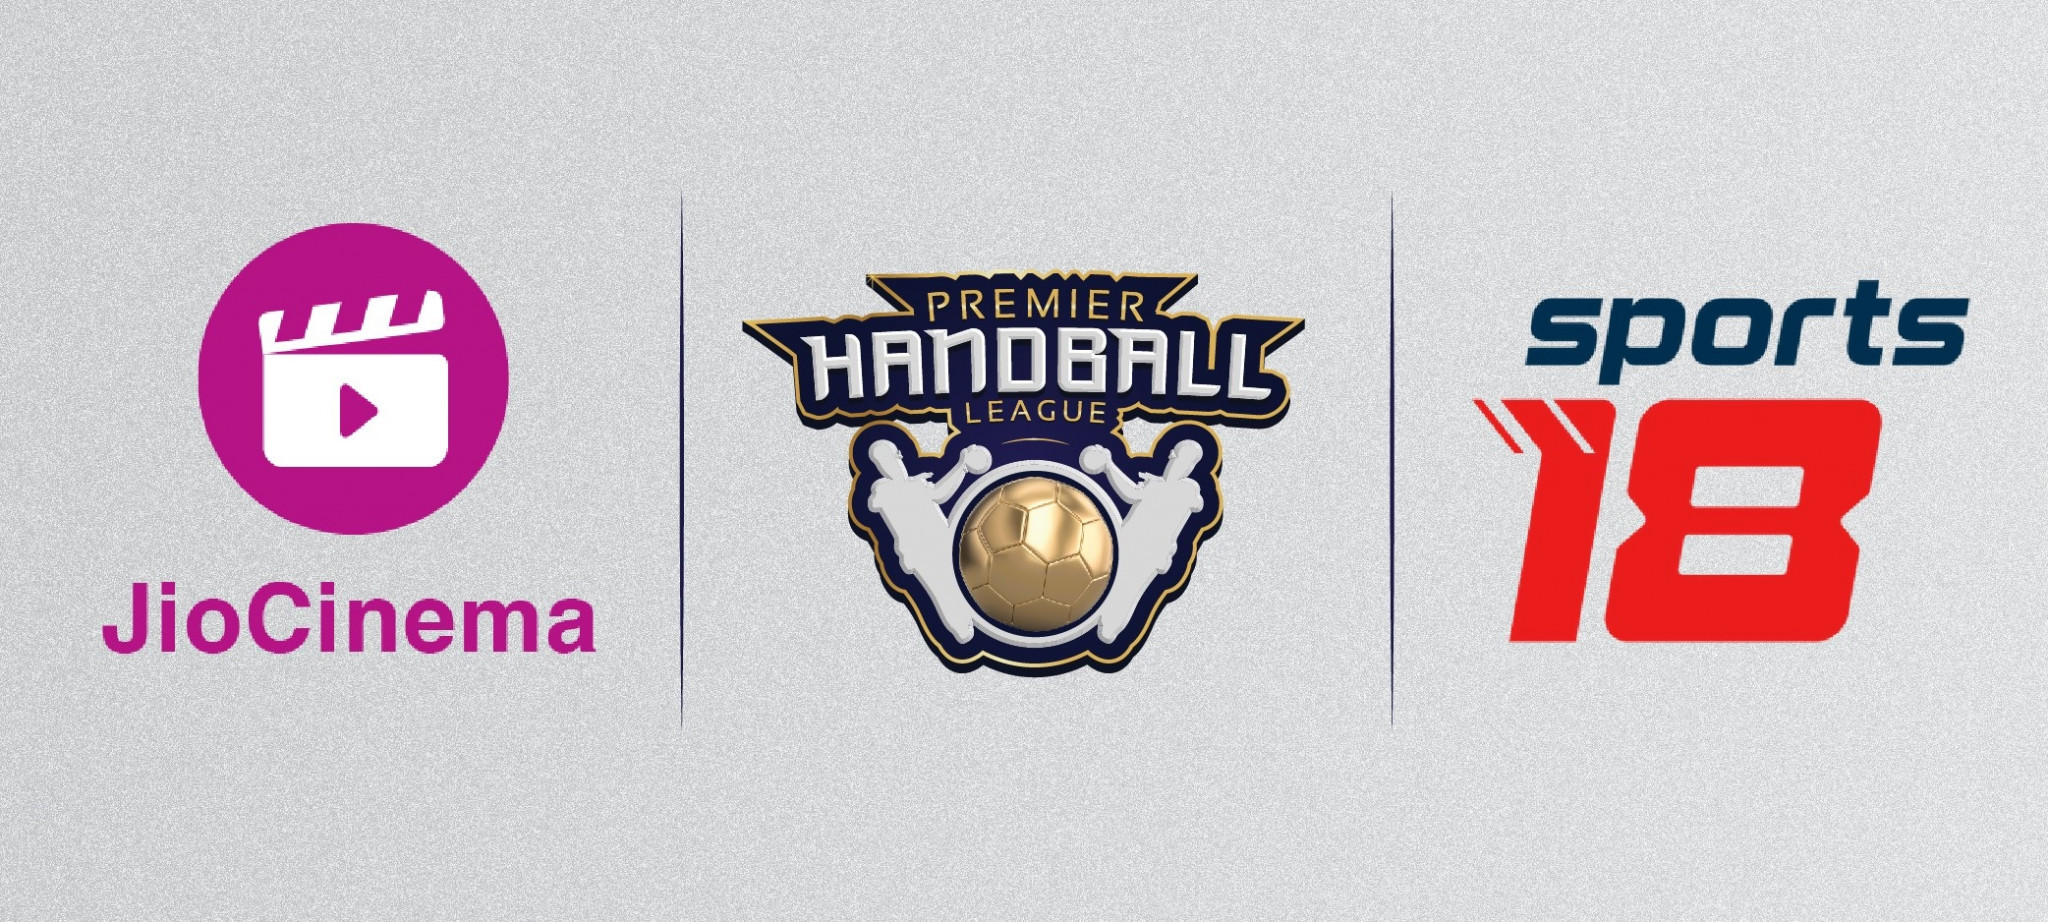 Viacom18 seals broadcast rights for first season of India’s Premier Handball League